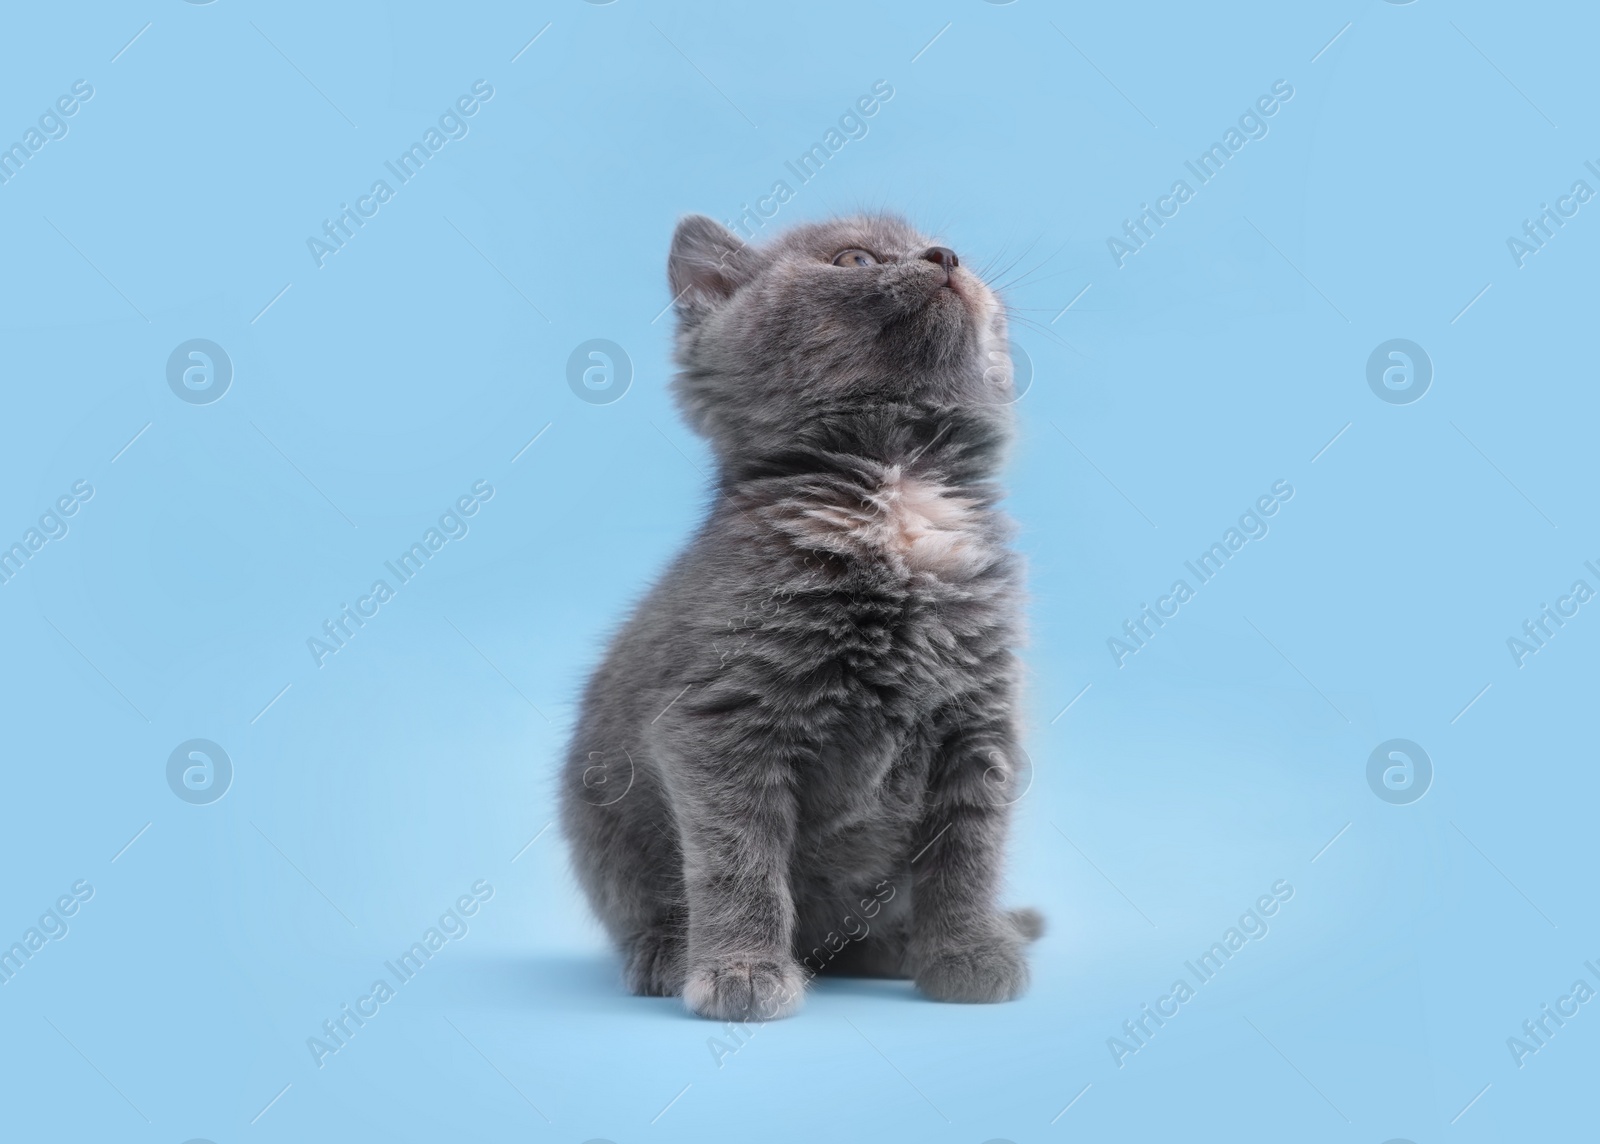 Photo of Cute little grey kitten sitting on light blue background